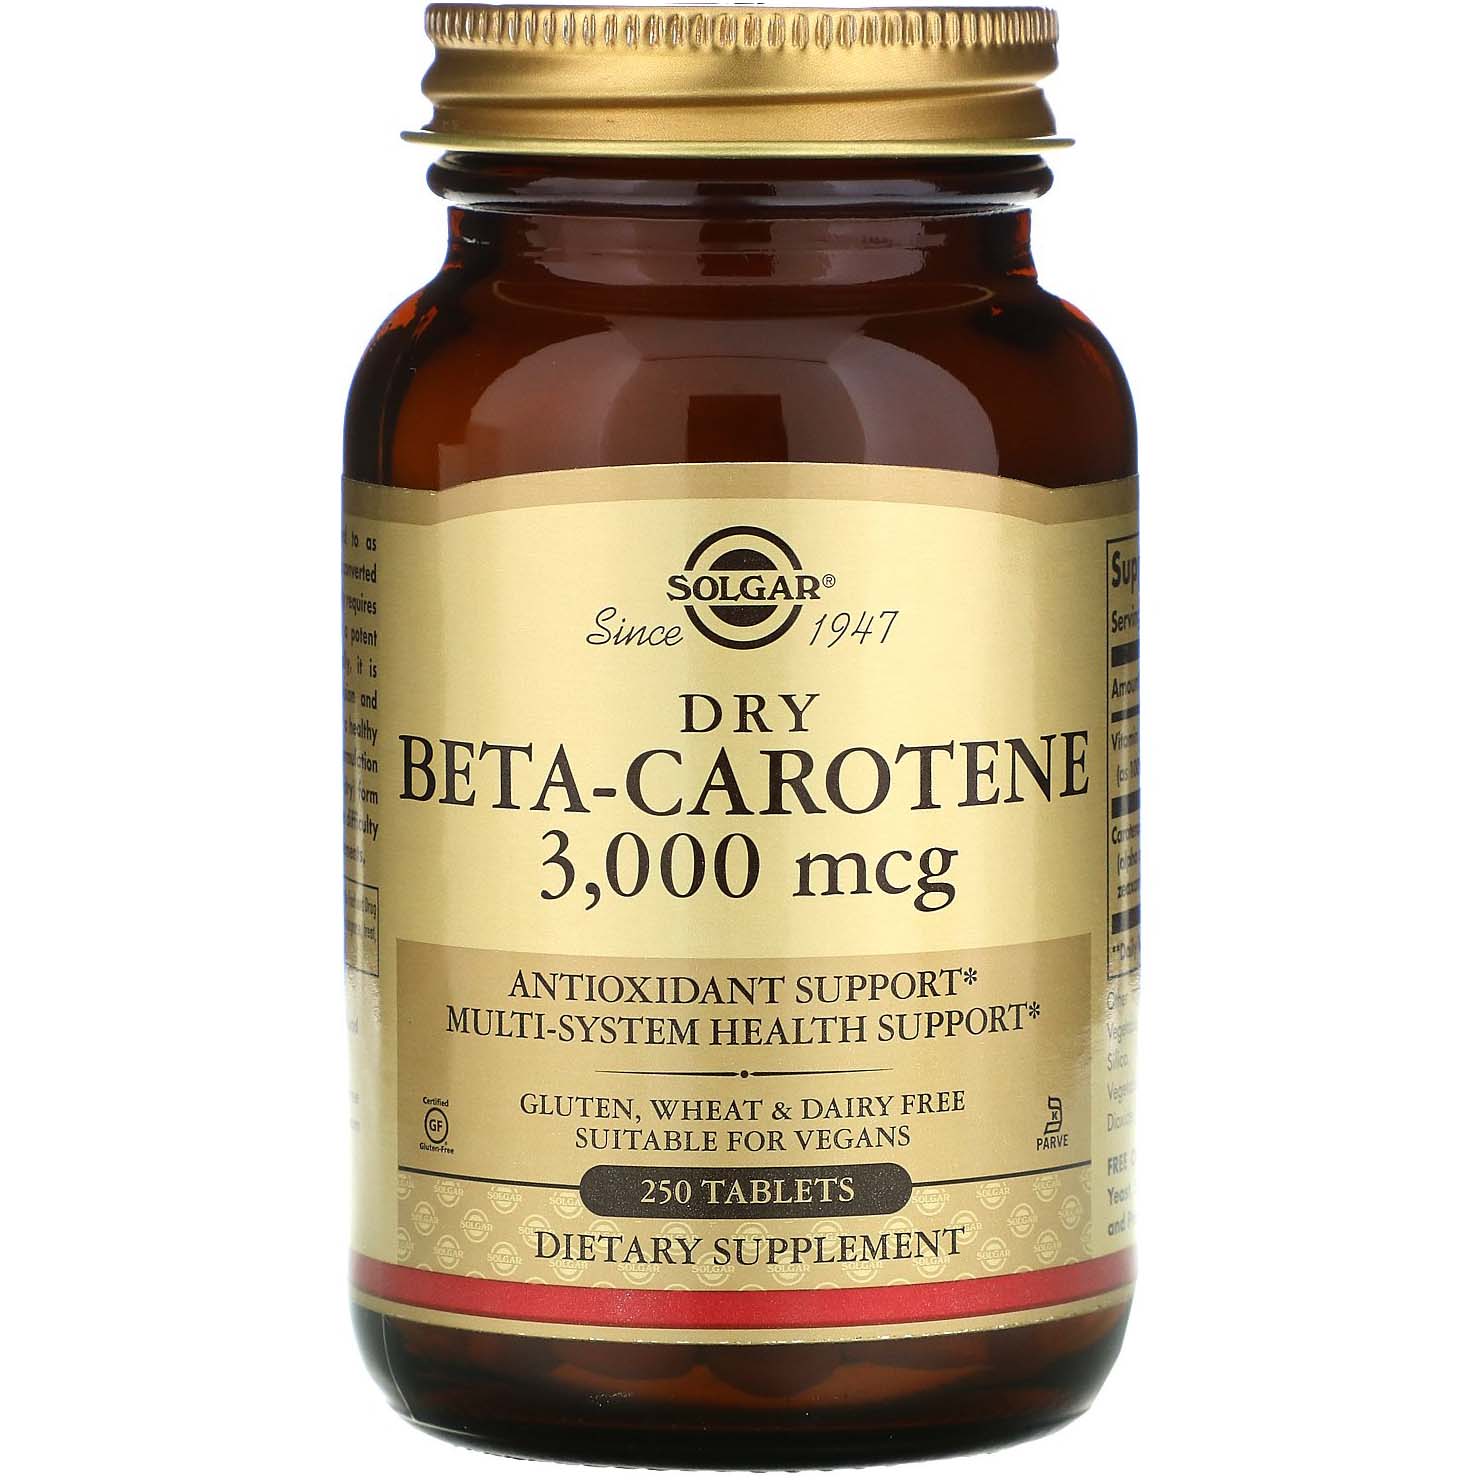 Solgar Dry Beta-carotene, 3000 mcg, 250 Tablets